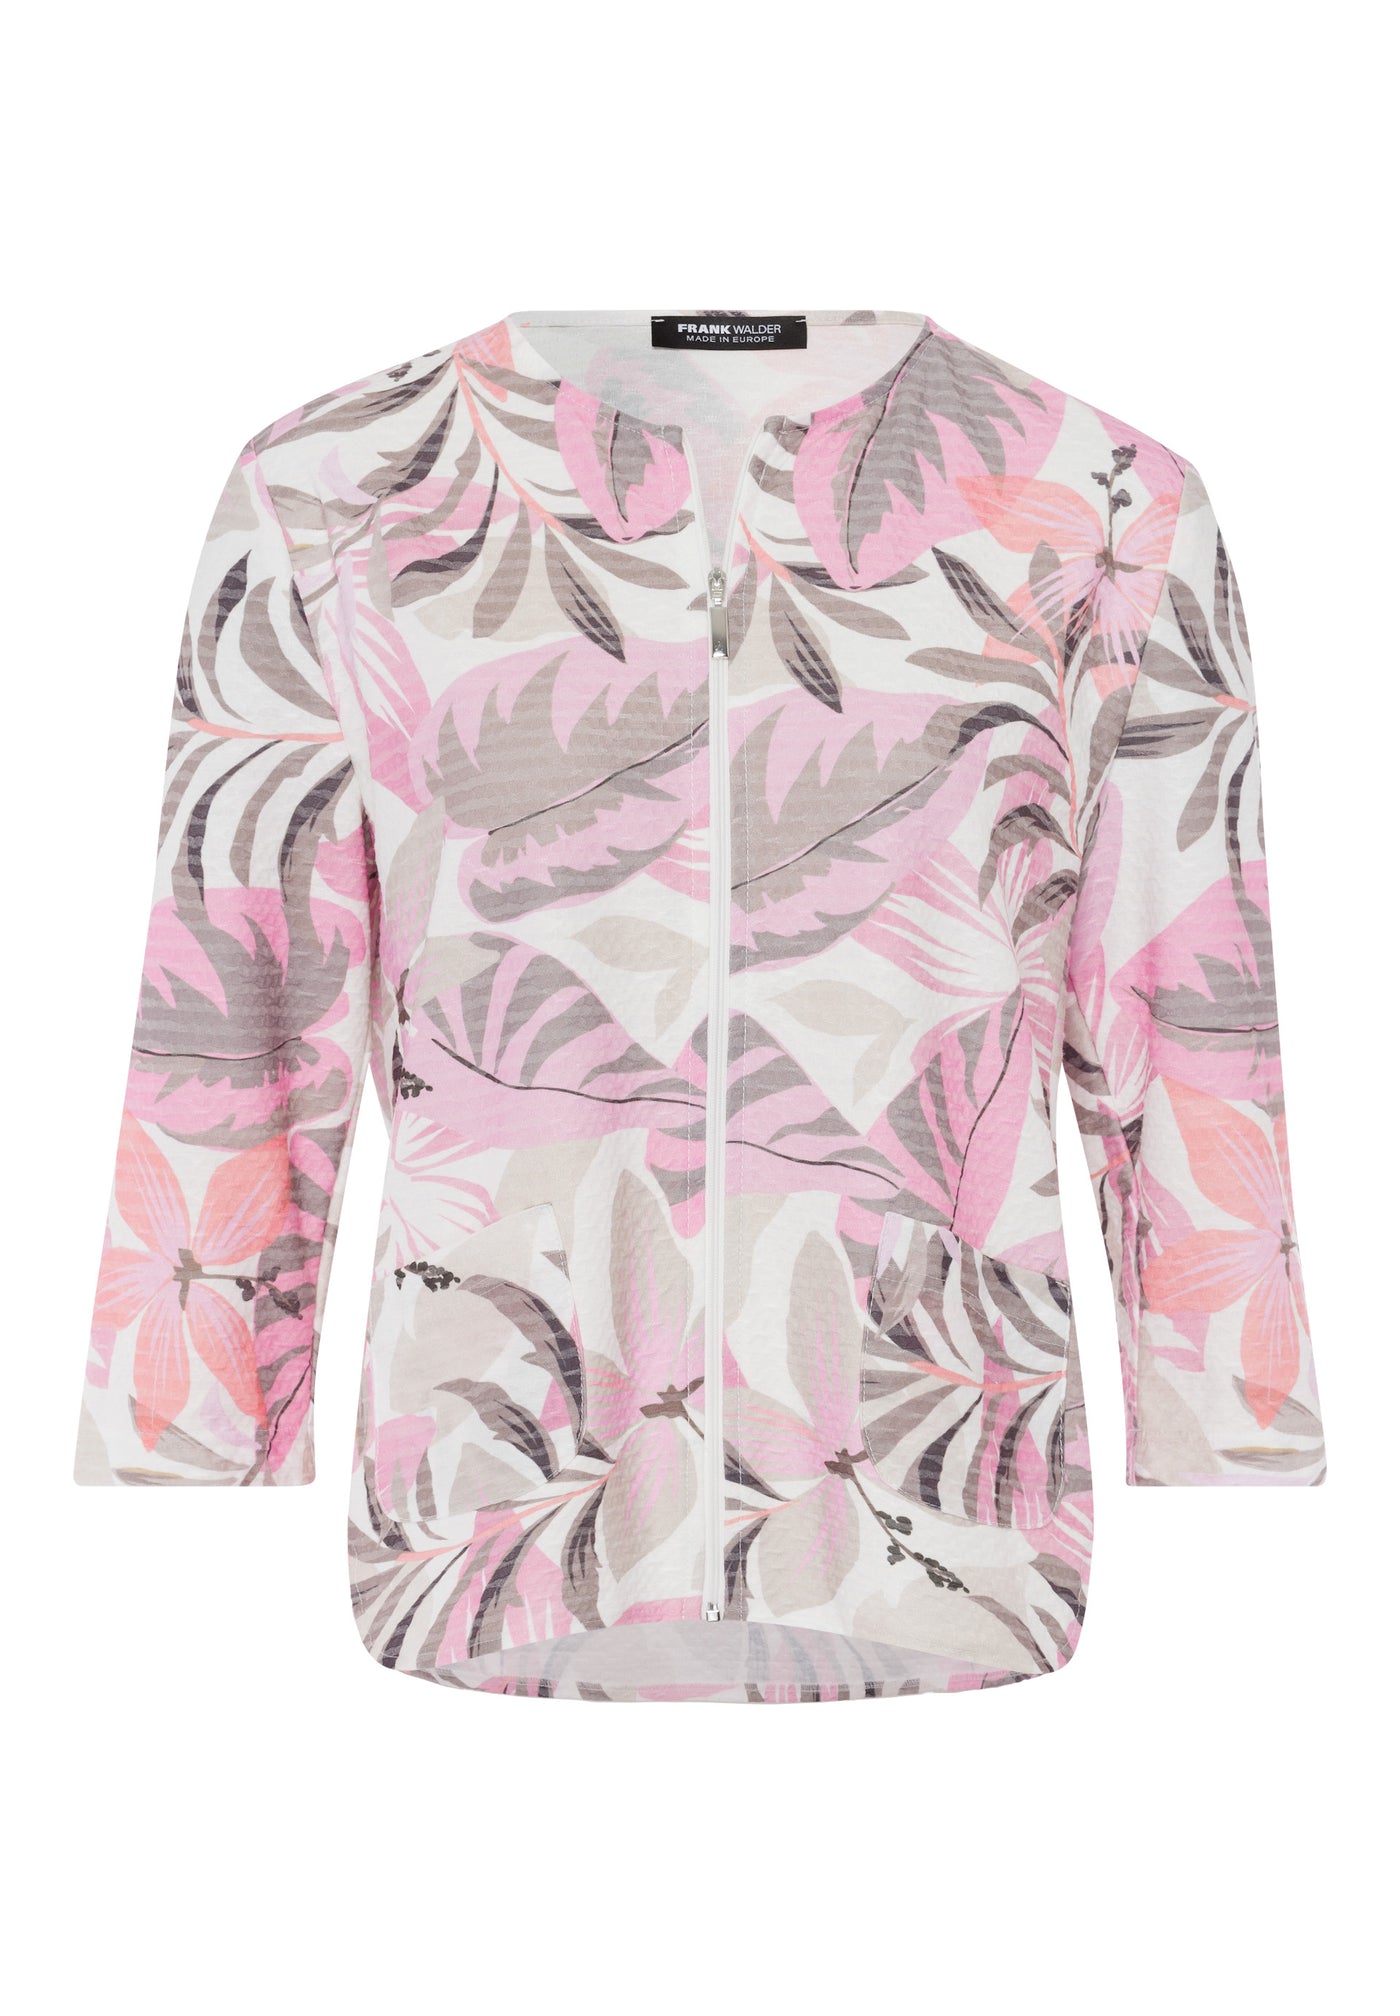 Cream Zip Up Jacket with Pastel Floral Print & Pocket Detail